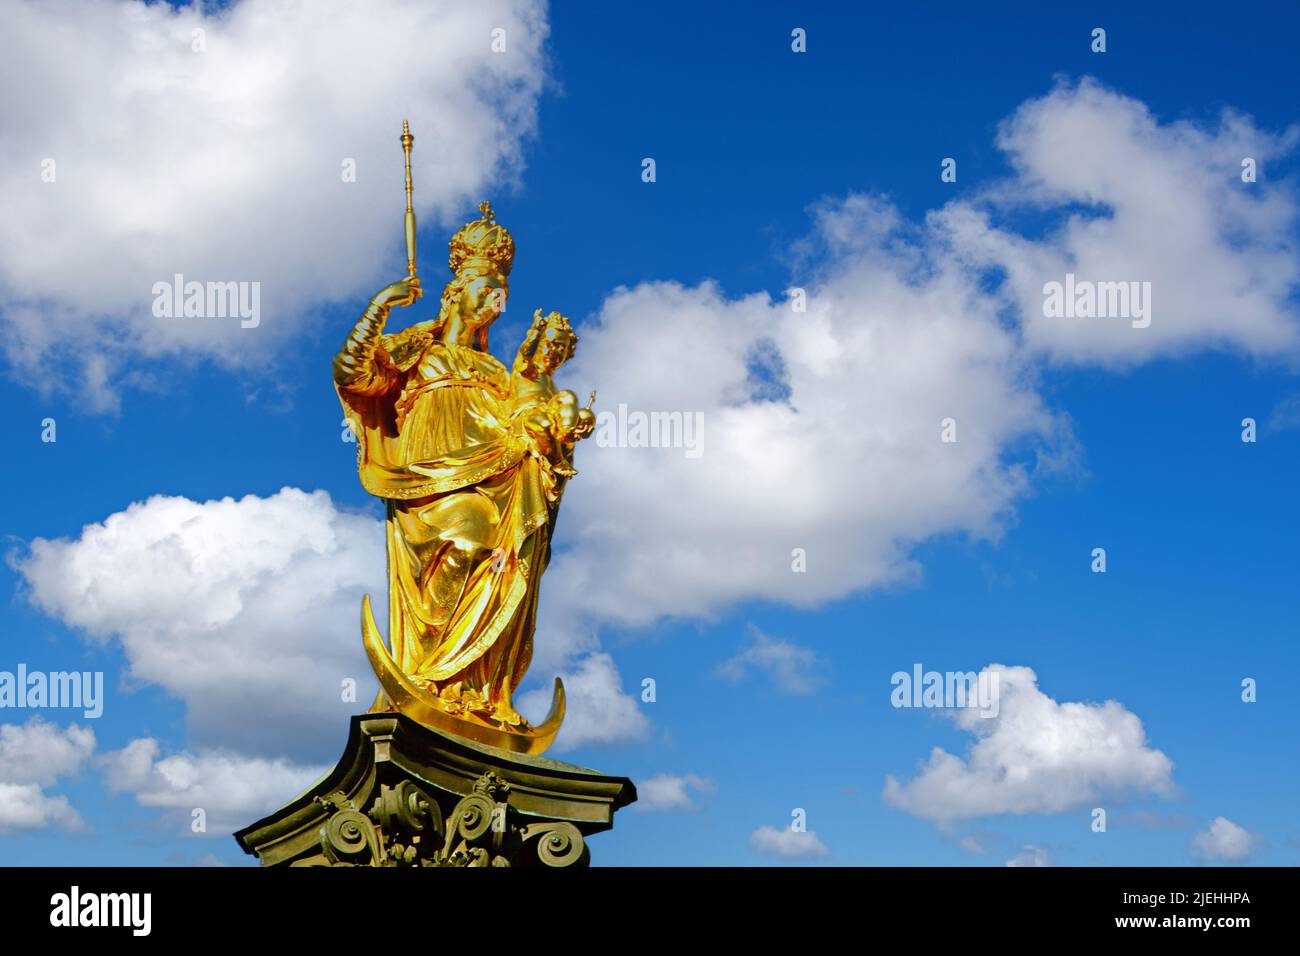 Deutschland, München, Marienplatz, Mariensäule, goldene Statua der Maria Foto Stock